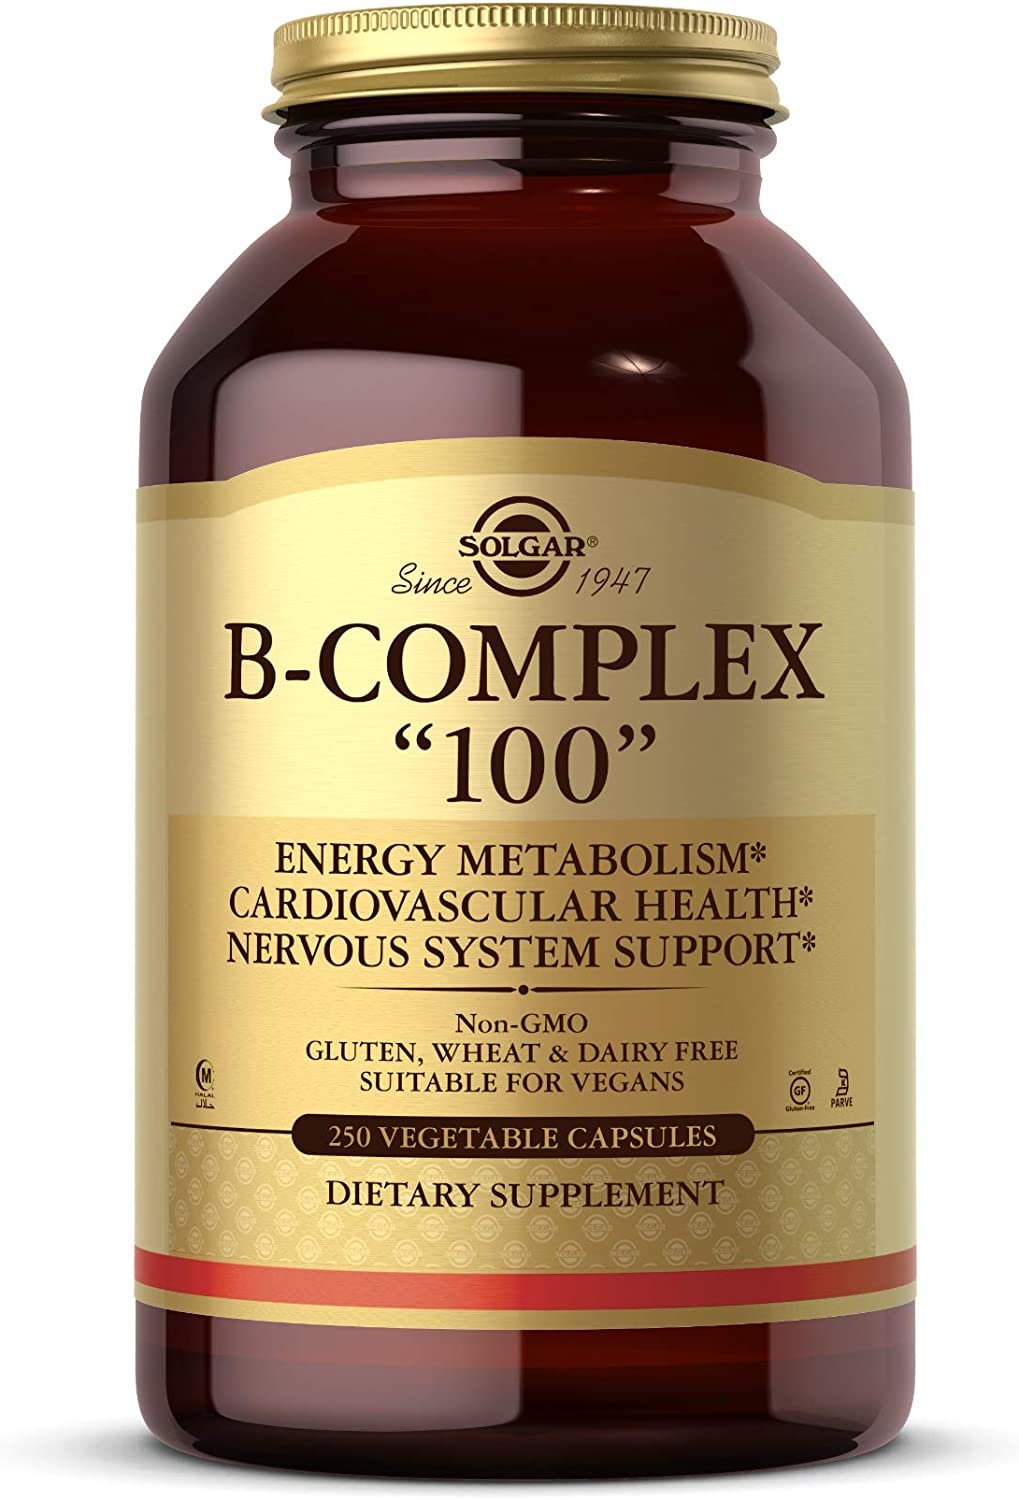 Solgar B-Complex "100" - Heart, Nervous System, Energy Metabolism - 250 ct